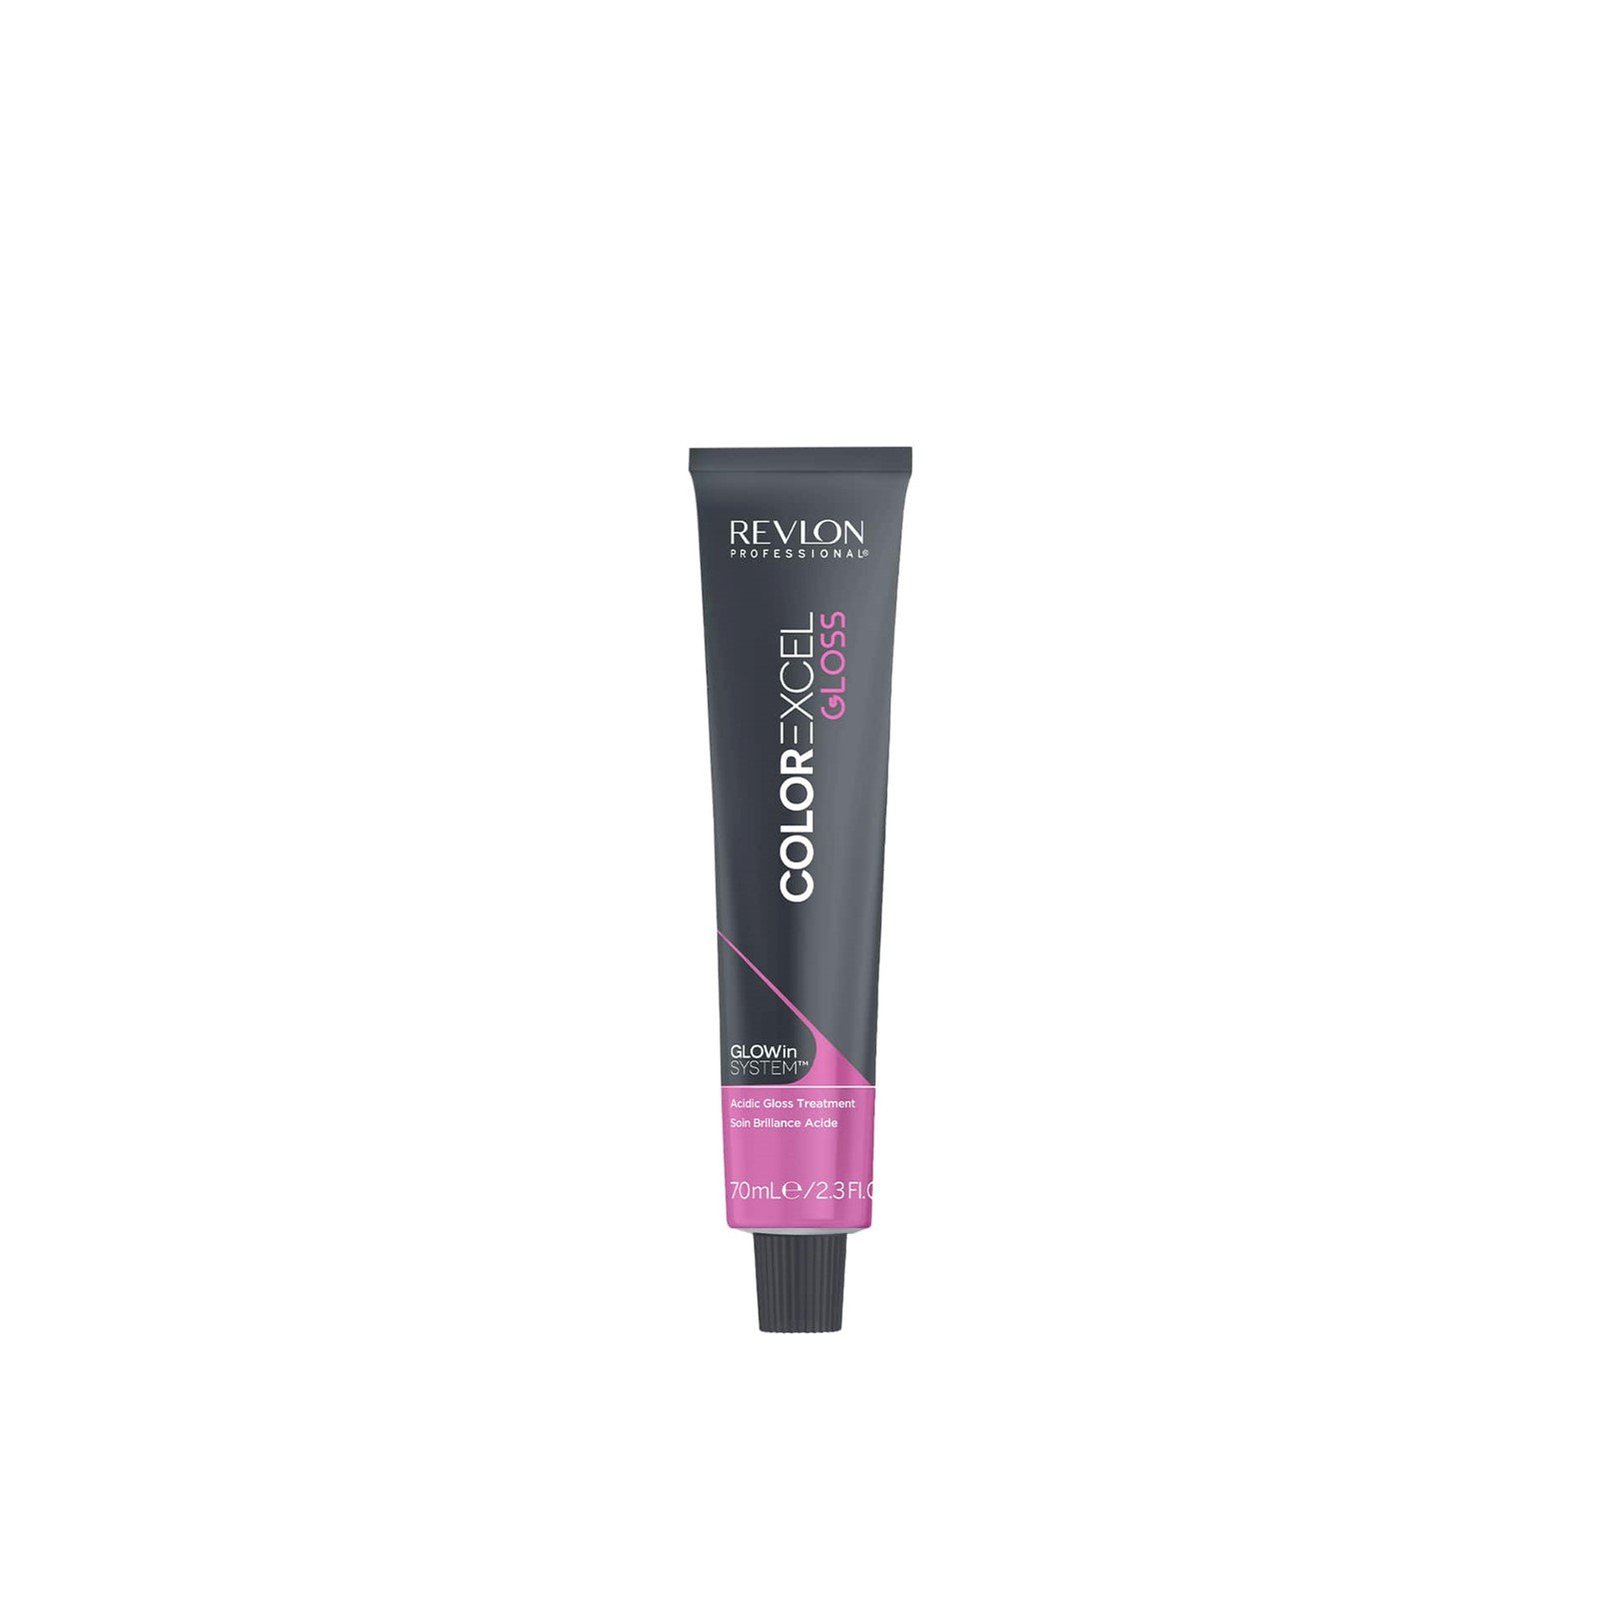 Revlon Professional Color Excel Gloss Acidic Gloss Treatment Demi-Permanent Hair Dye 10.01 Platinum Ice 70ml (2.3 fl oz)